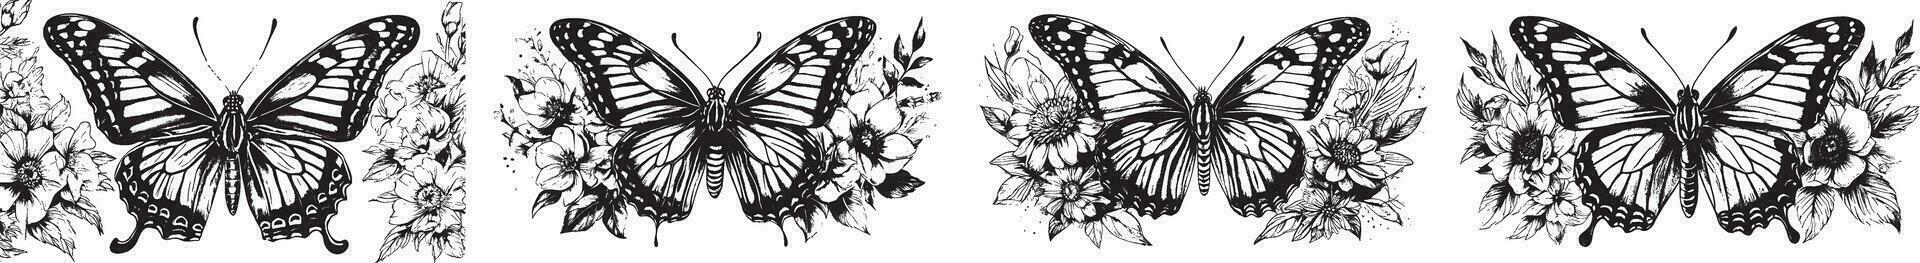 monarca mariposa con flor siluetas colección vector ilustración aislado en blanco antecedentes.